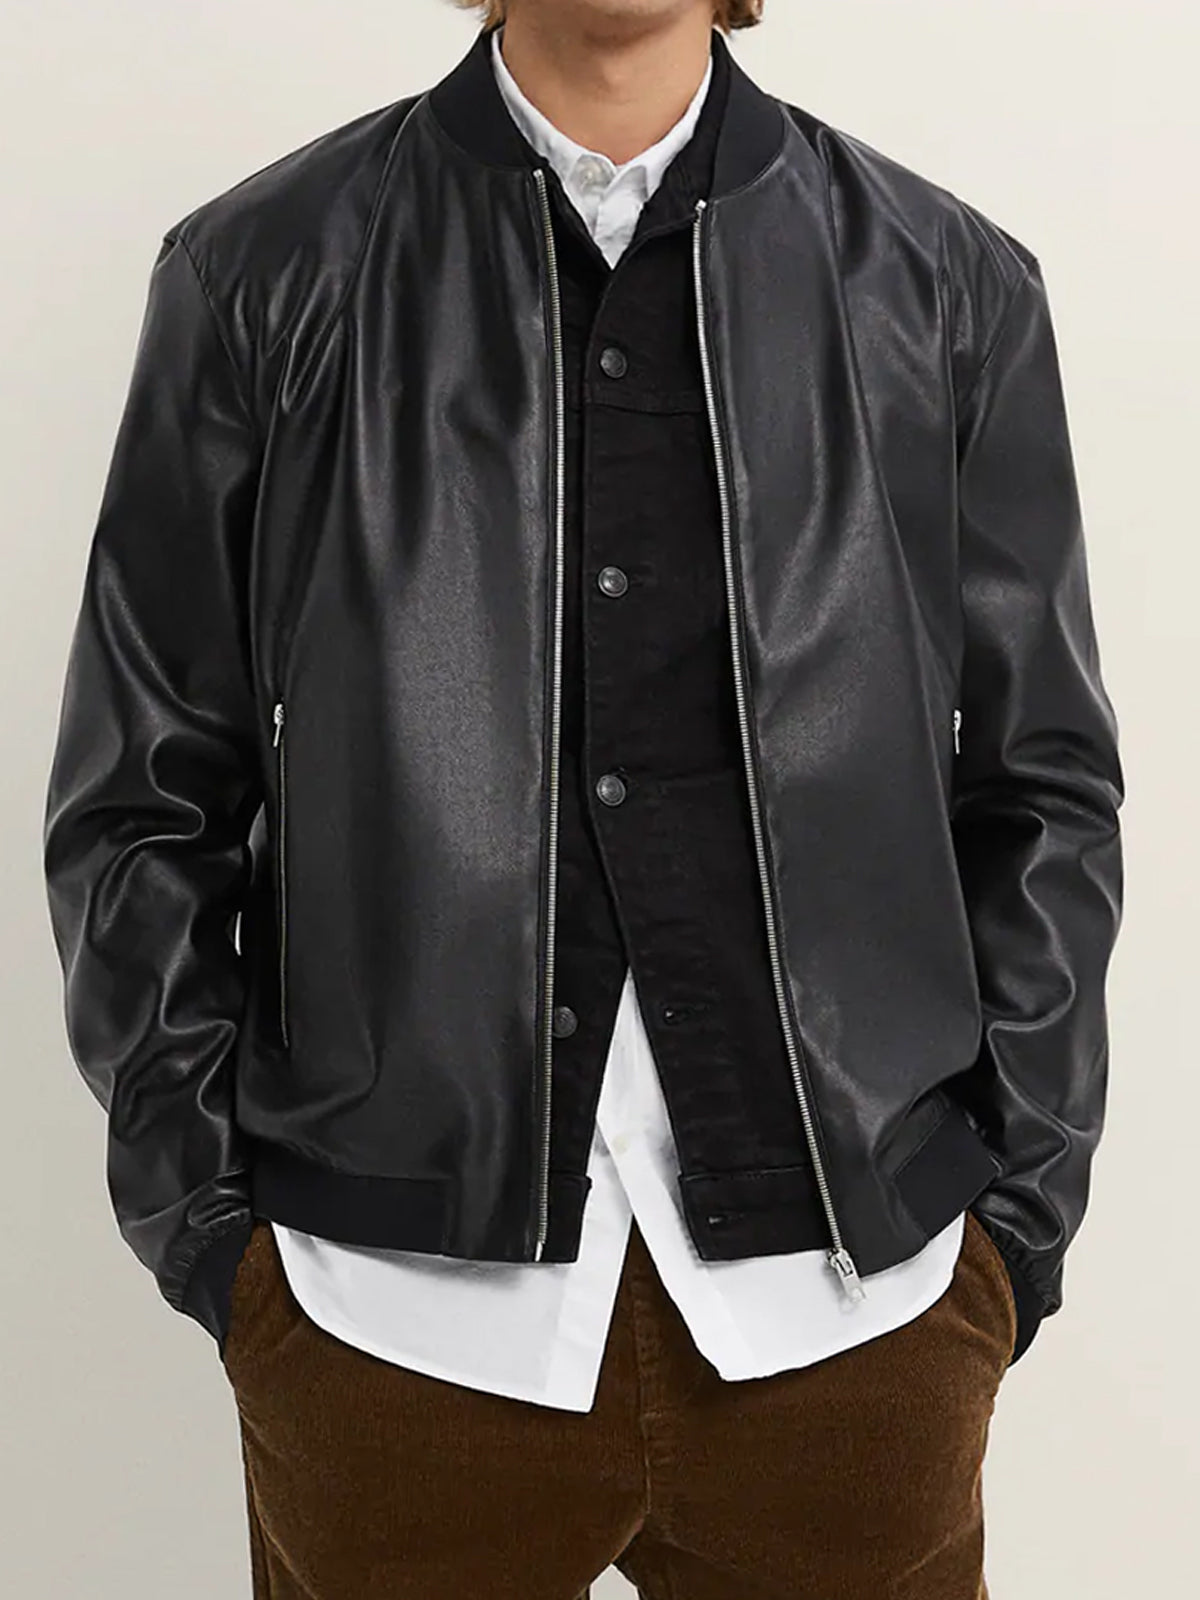 Zara Men's Faux Leather Bomber Jacket